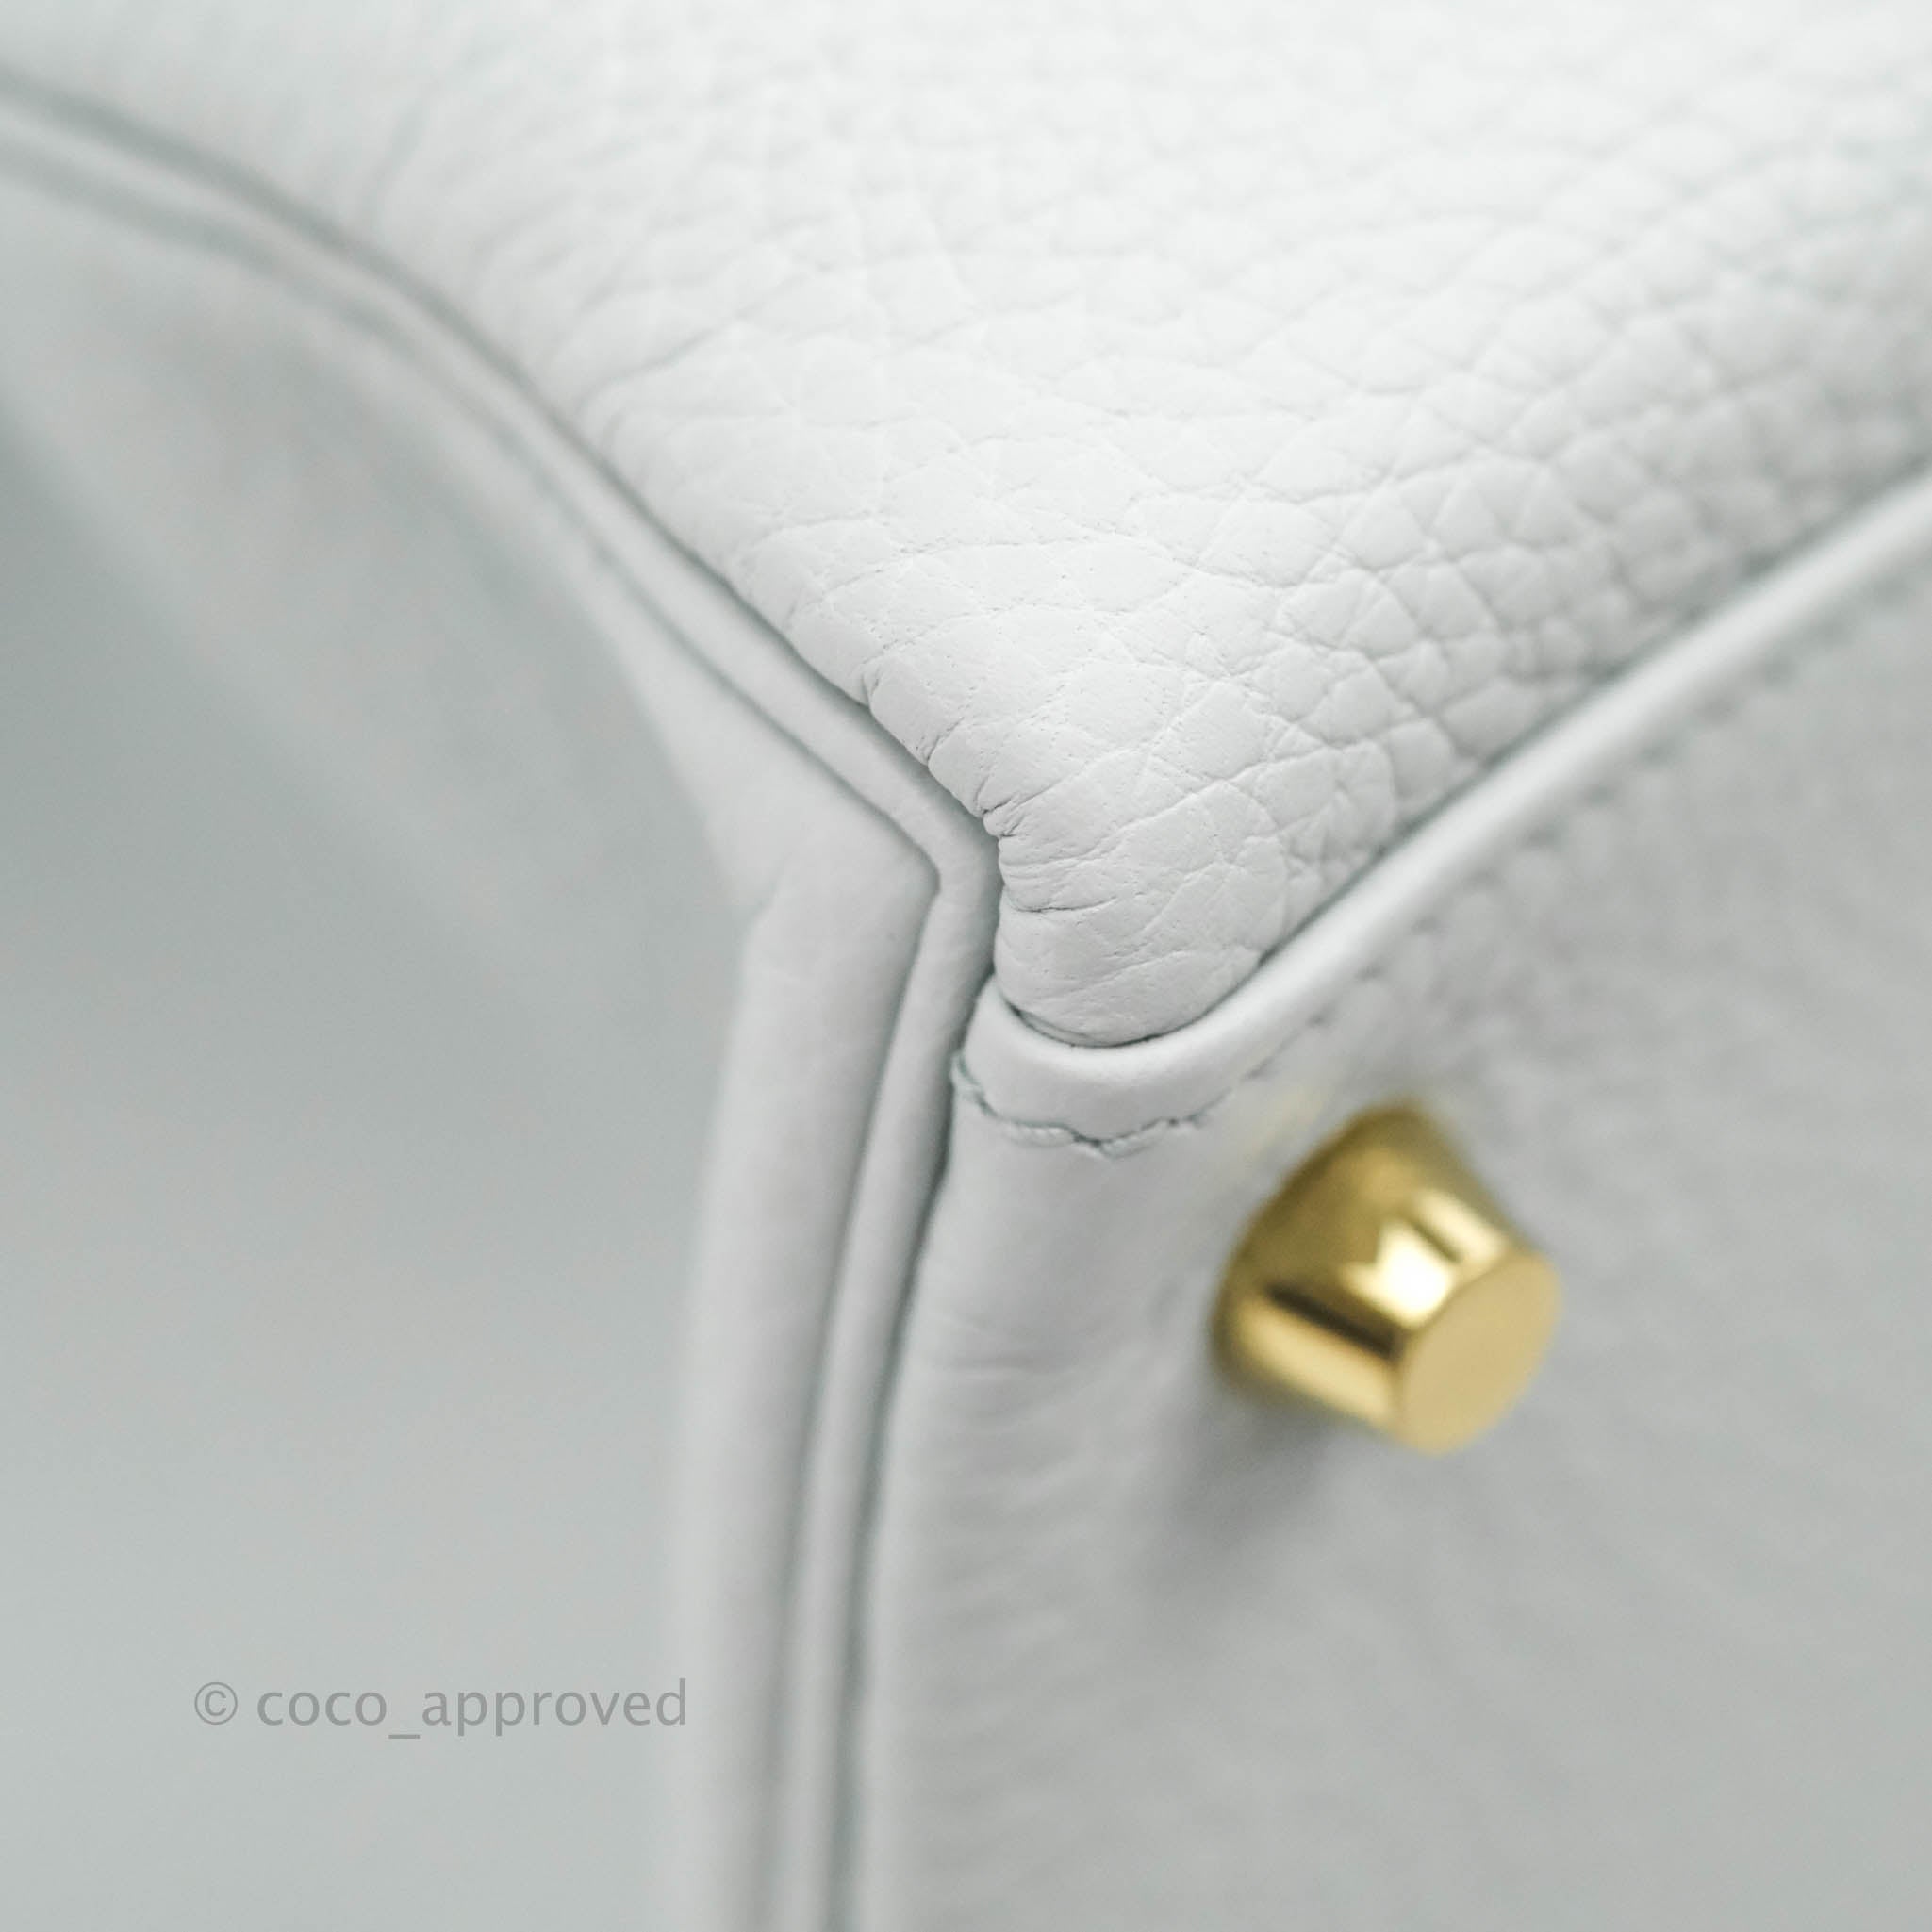 Hermès Kelly 28 Blue Royal Togo With Gold Hardware - AG Concierge Fzco